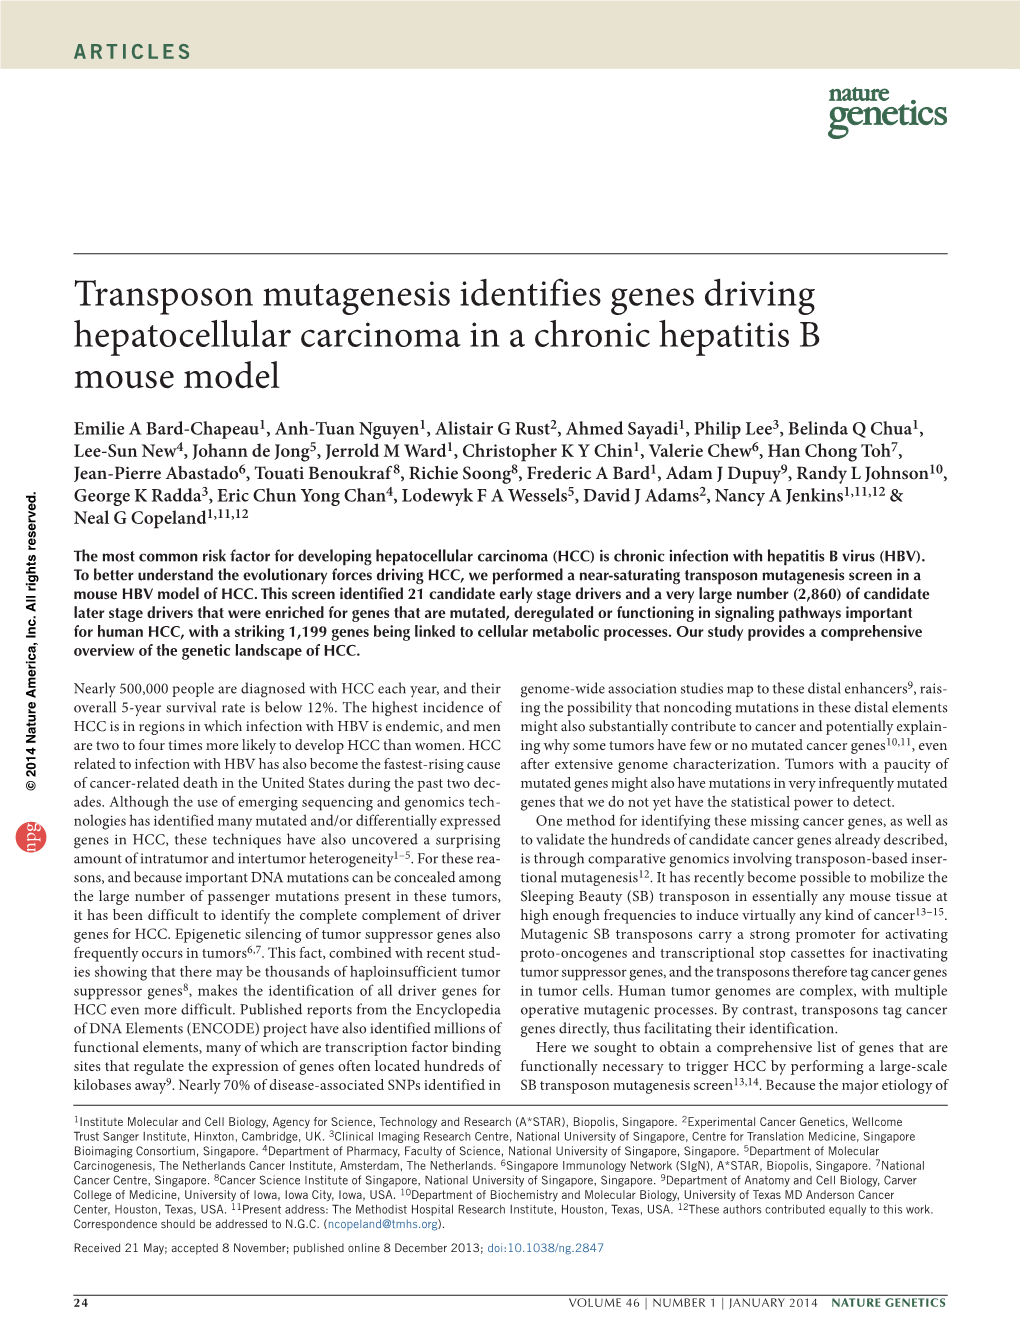 Transposon Mutagenesis Identifies Genes Driving Hepatocellular Carcinoma in a Chronic Hepatitis B Mouse Model